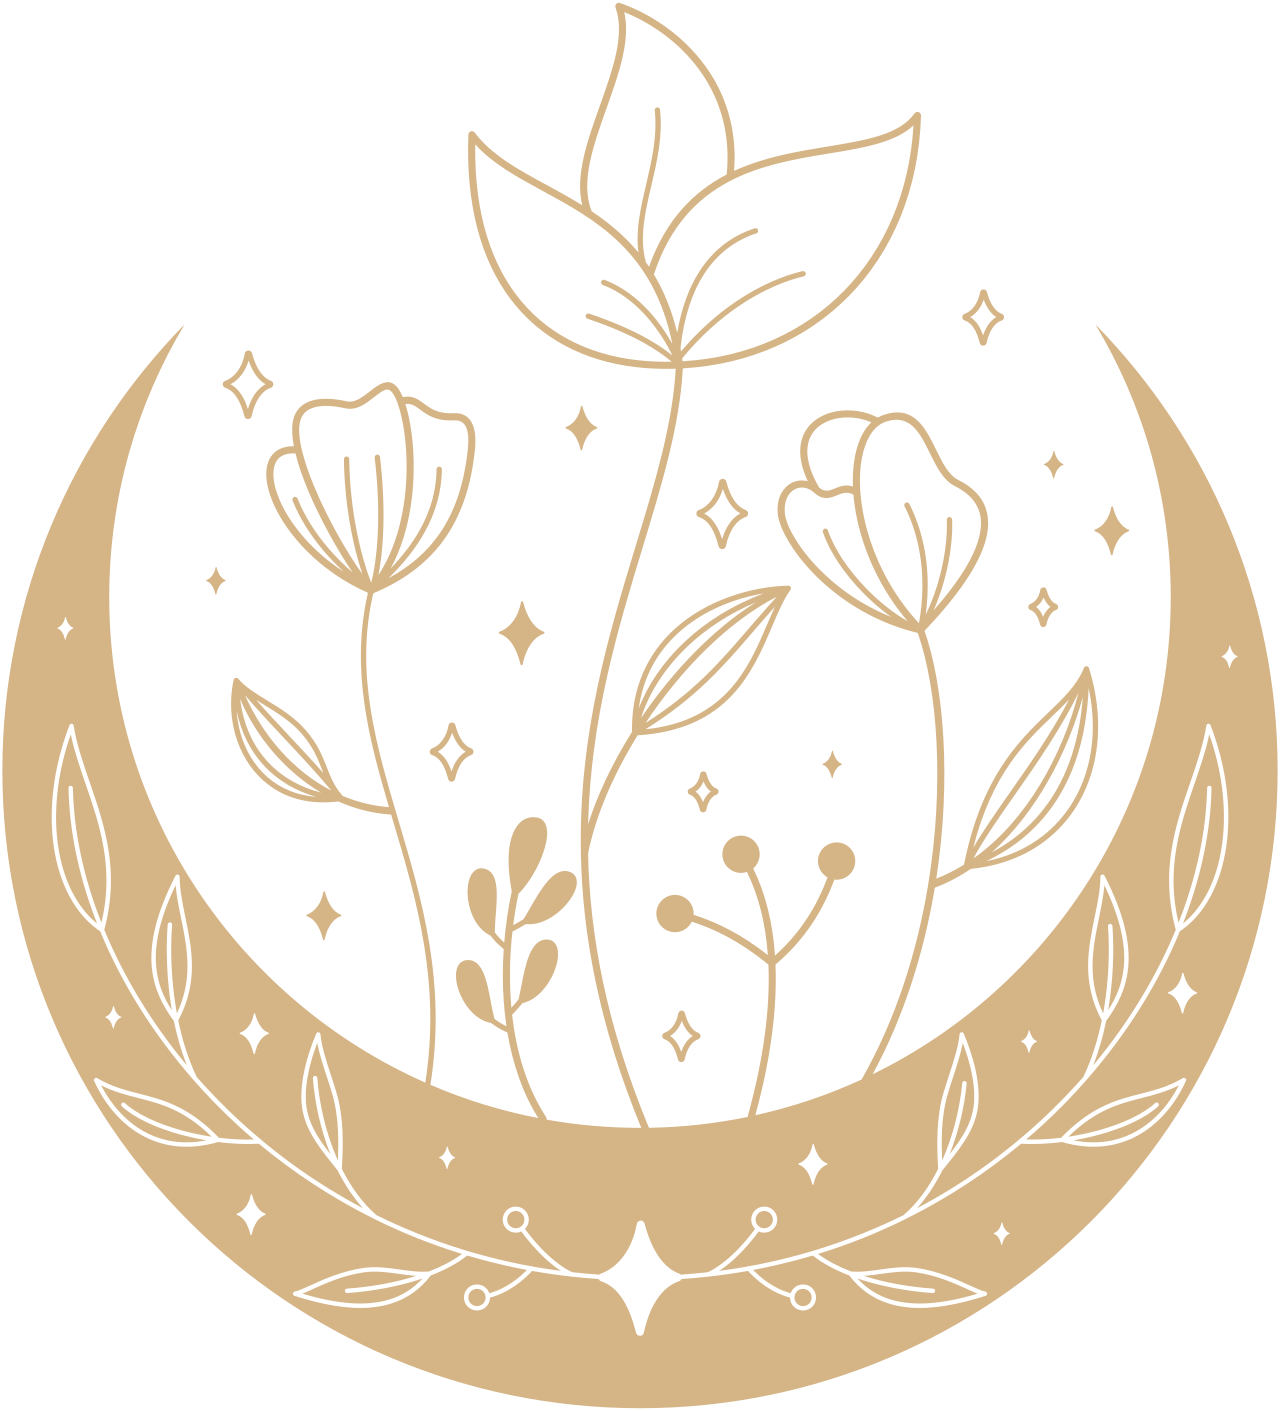 Mystic Garden Craft Co.'s logo